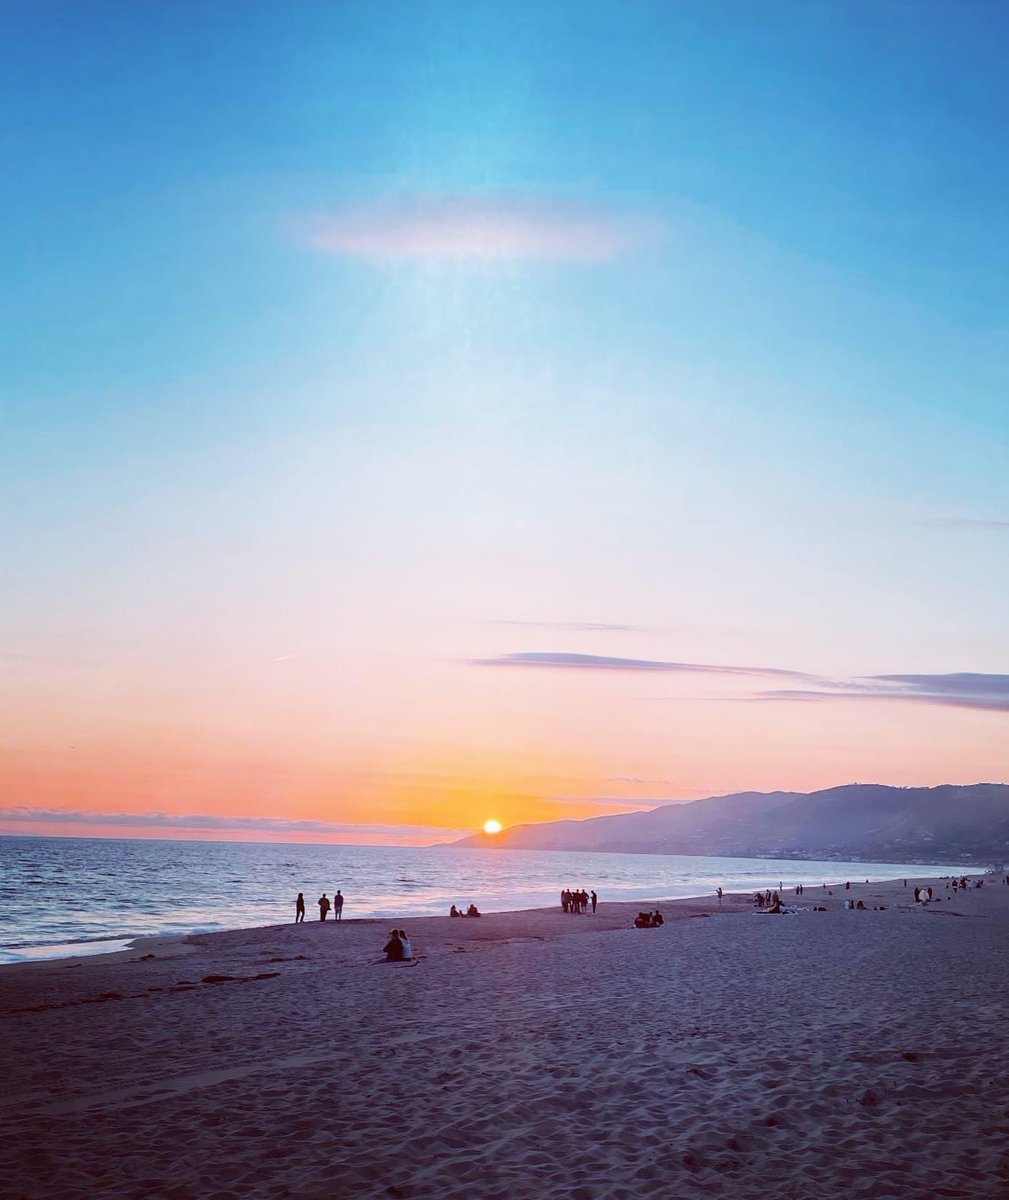 Sunset in Malibu ❤️

#sunsetlovers #MotherNature #graceful #enjoythelittlethings #LifeisBeautiful